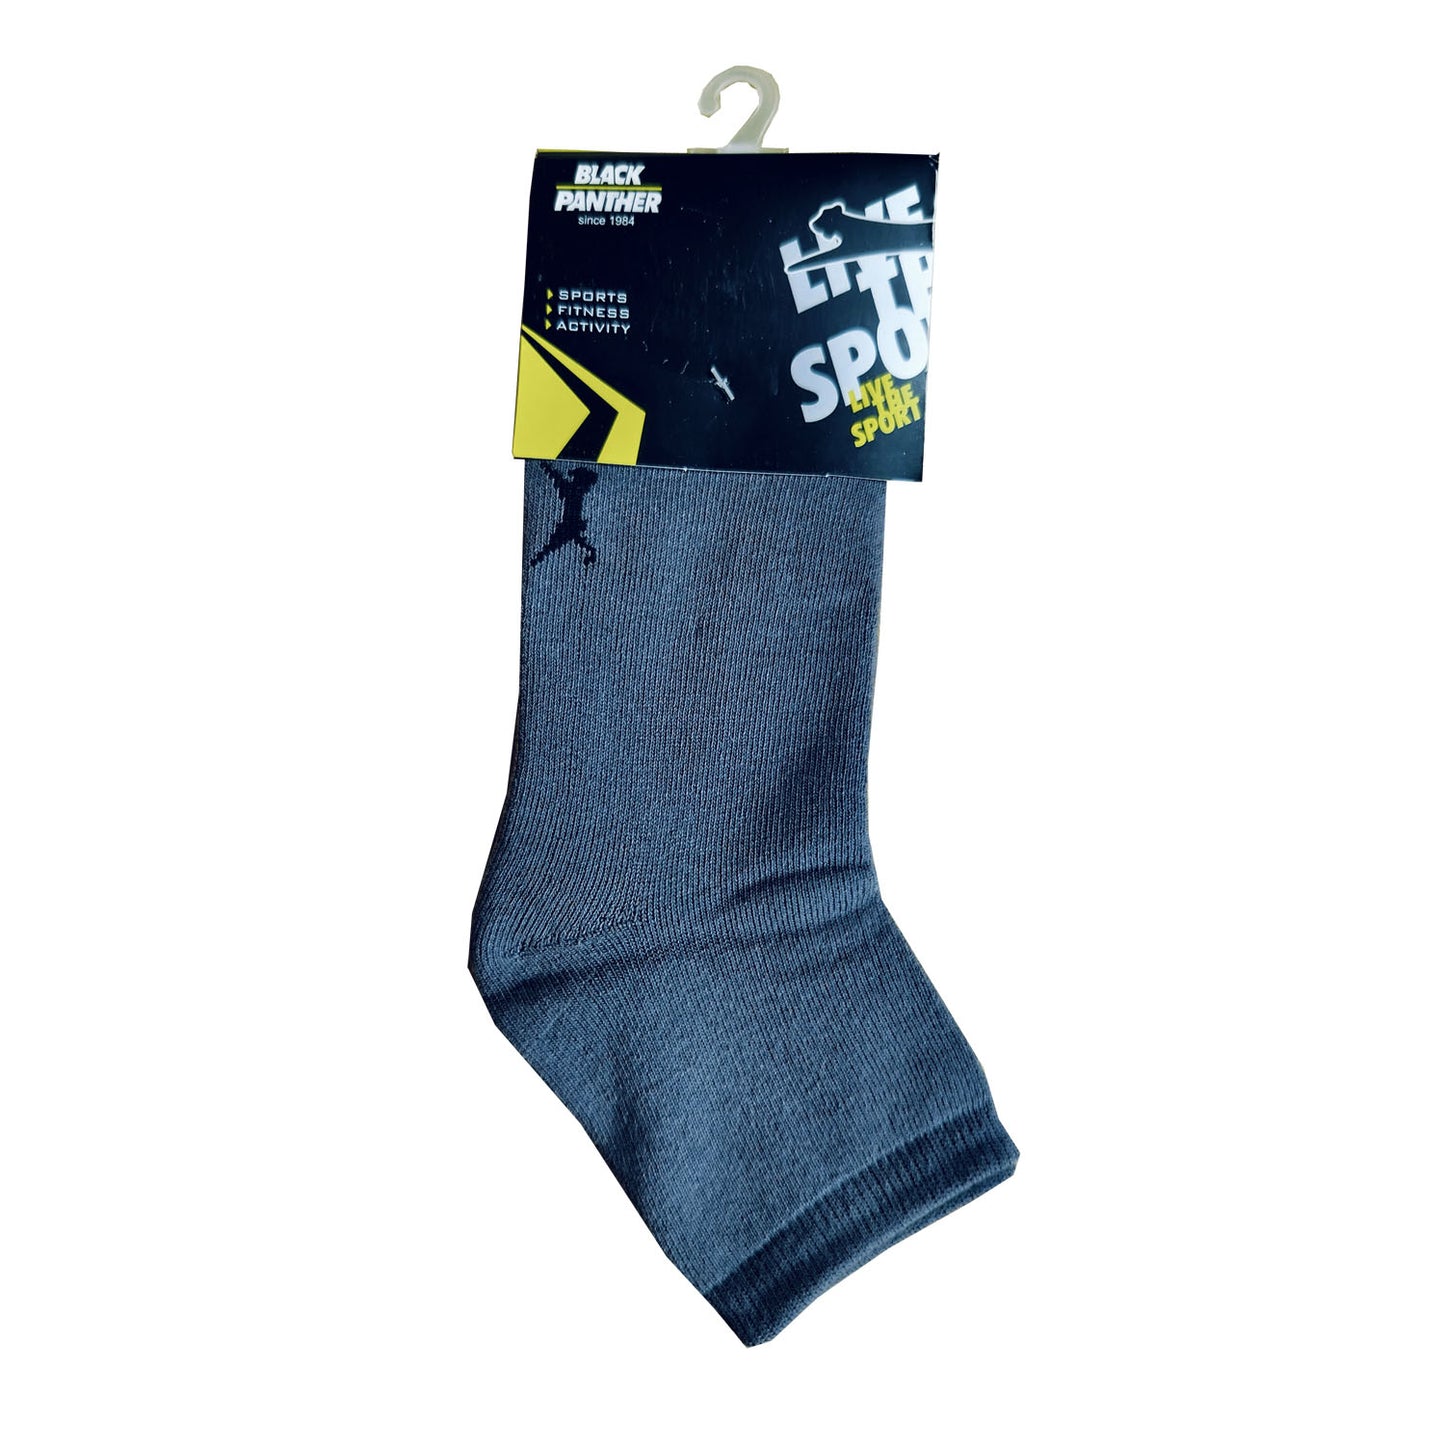 Black Panther Cool Walk Socks - Assorted - Best Price online Prokicksports.com